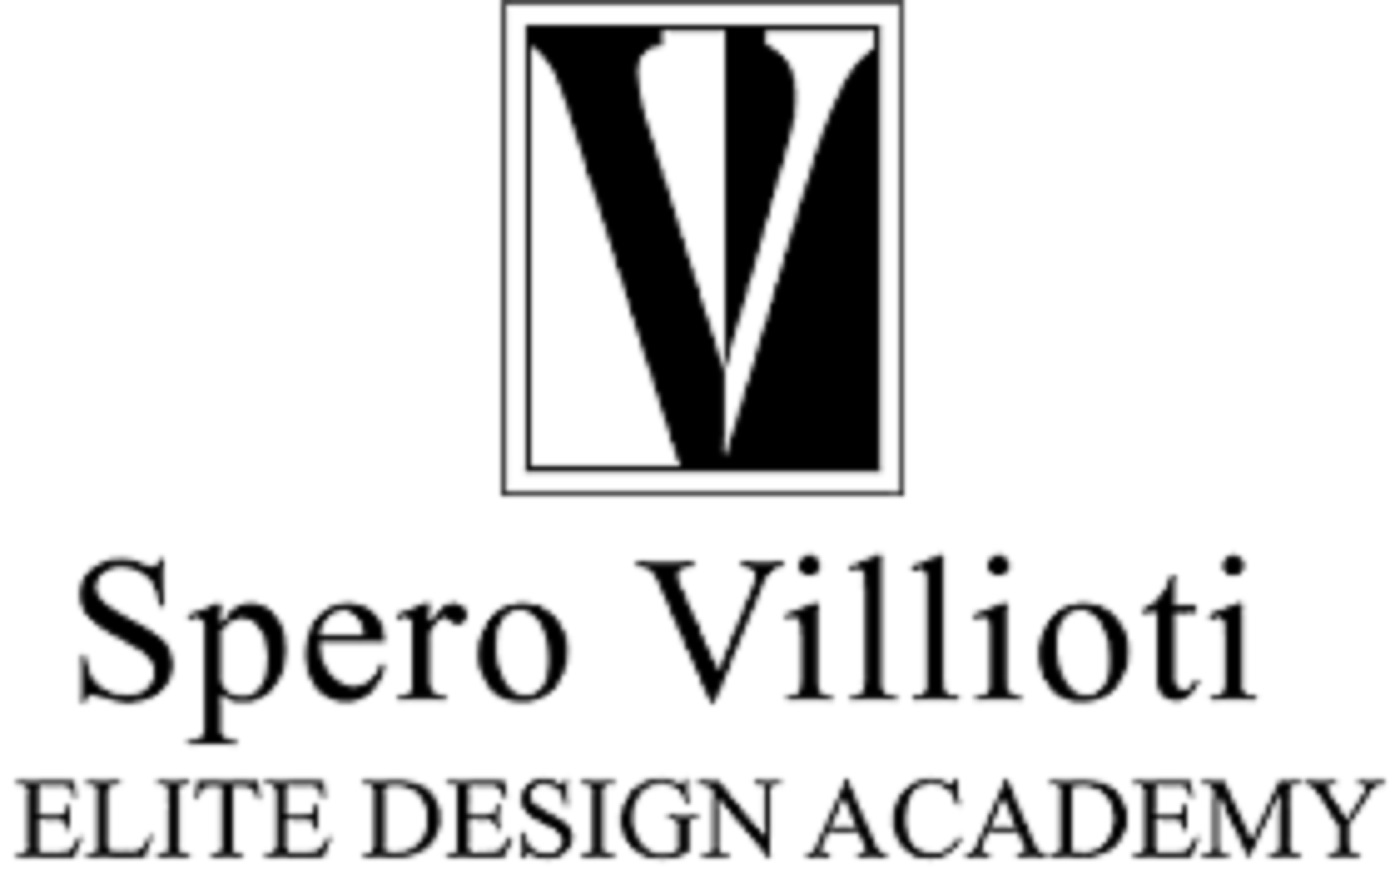 Spero Villioti Elite Design Academy Postgraduate Online Application